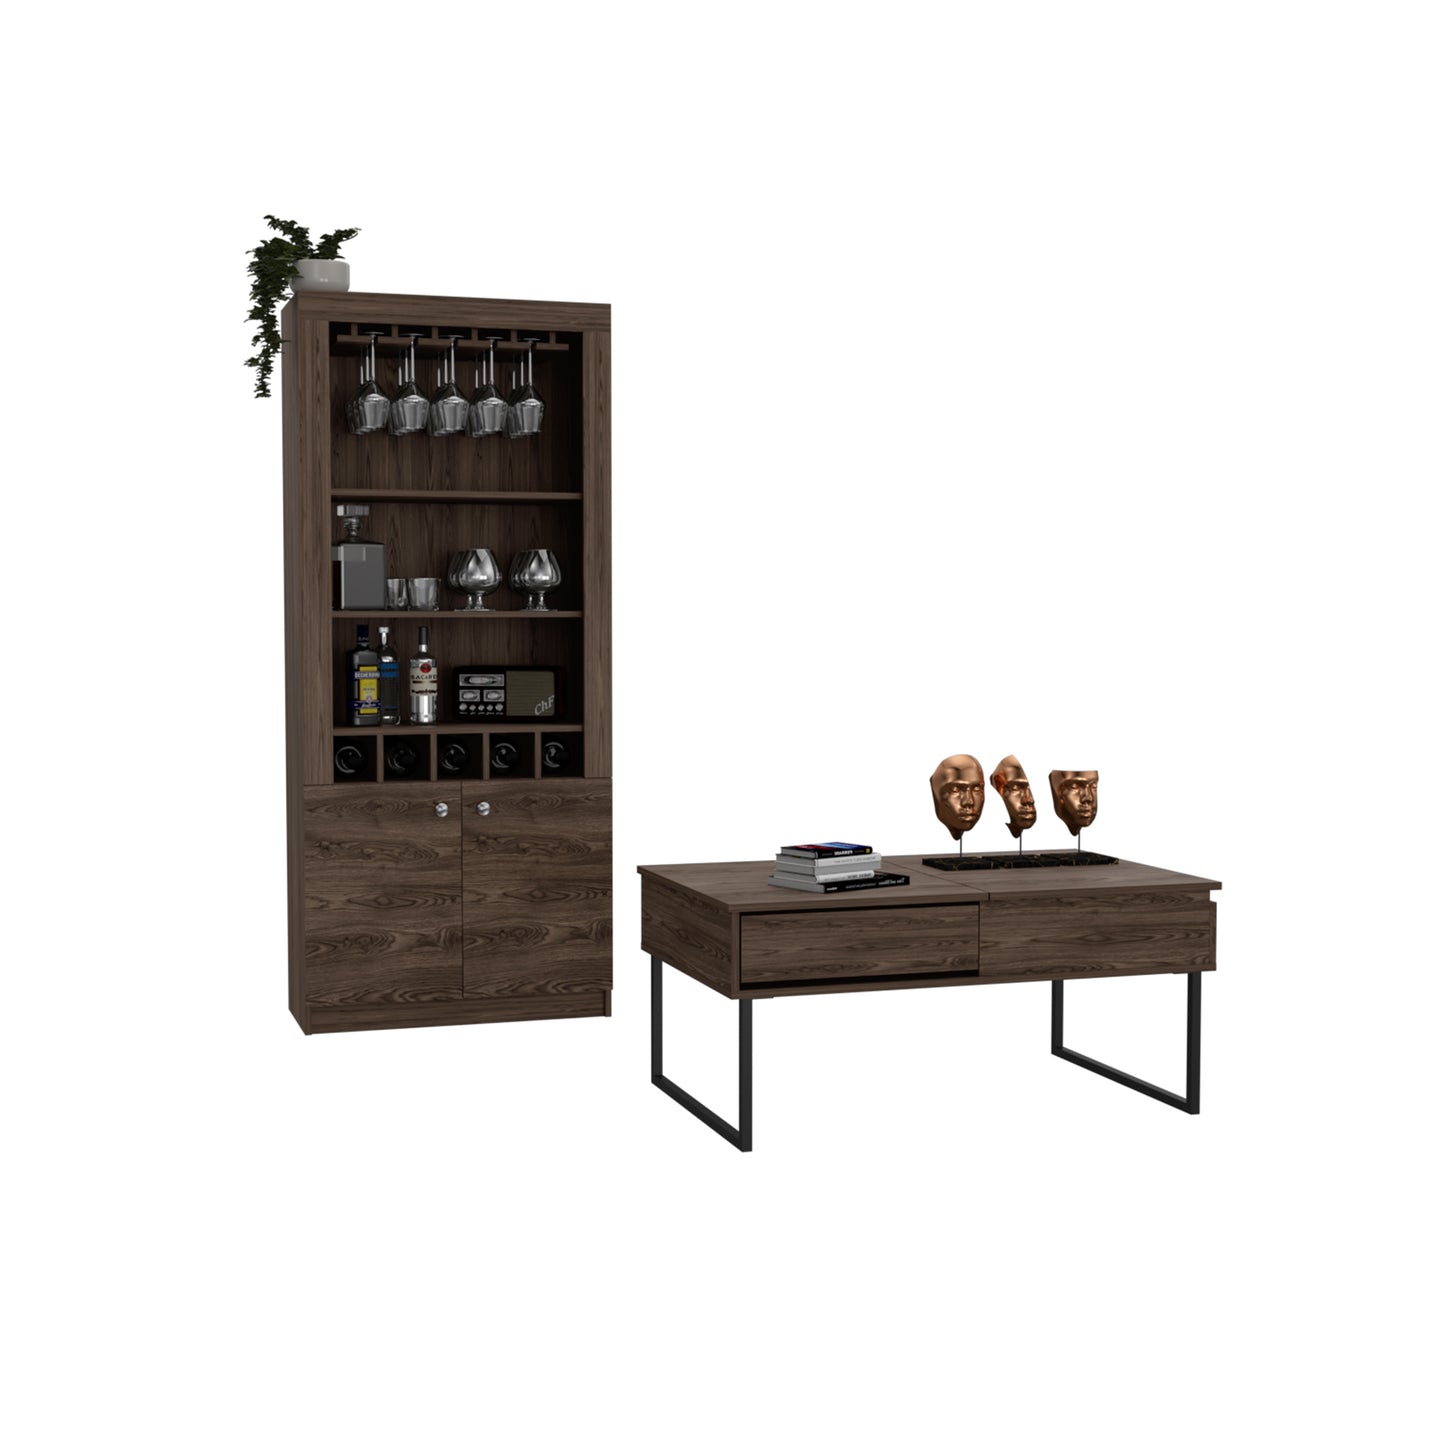 Orleans 2 Piece Living Room Set, Bar Cabinet + Coffee Table, Dark Walnut Finish